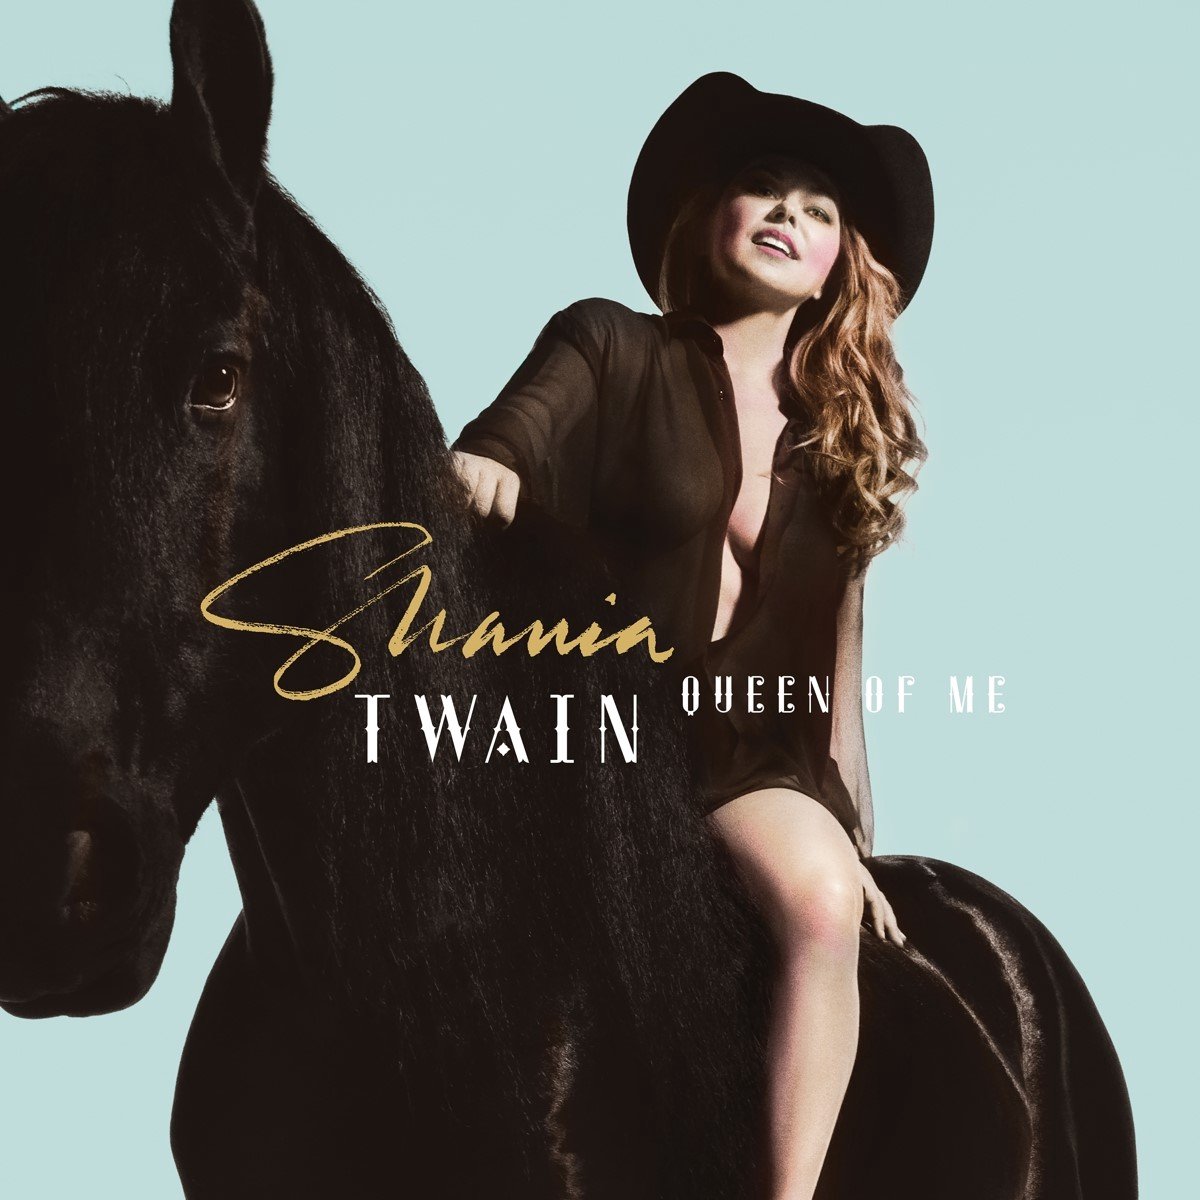 Shania Twain - Queen Of Me (CD) - Shania Twain